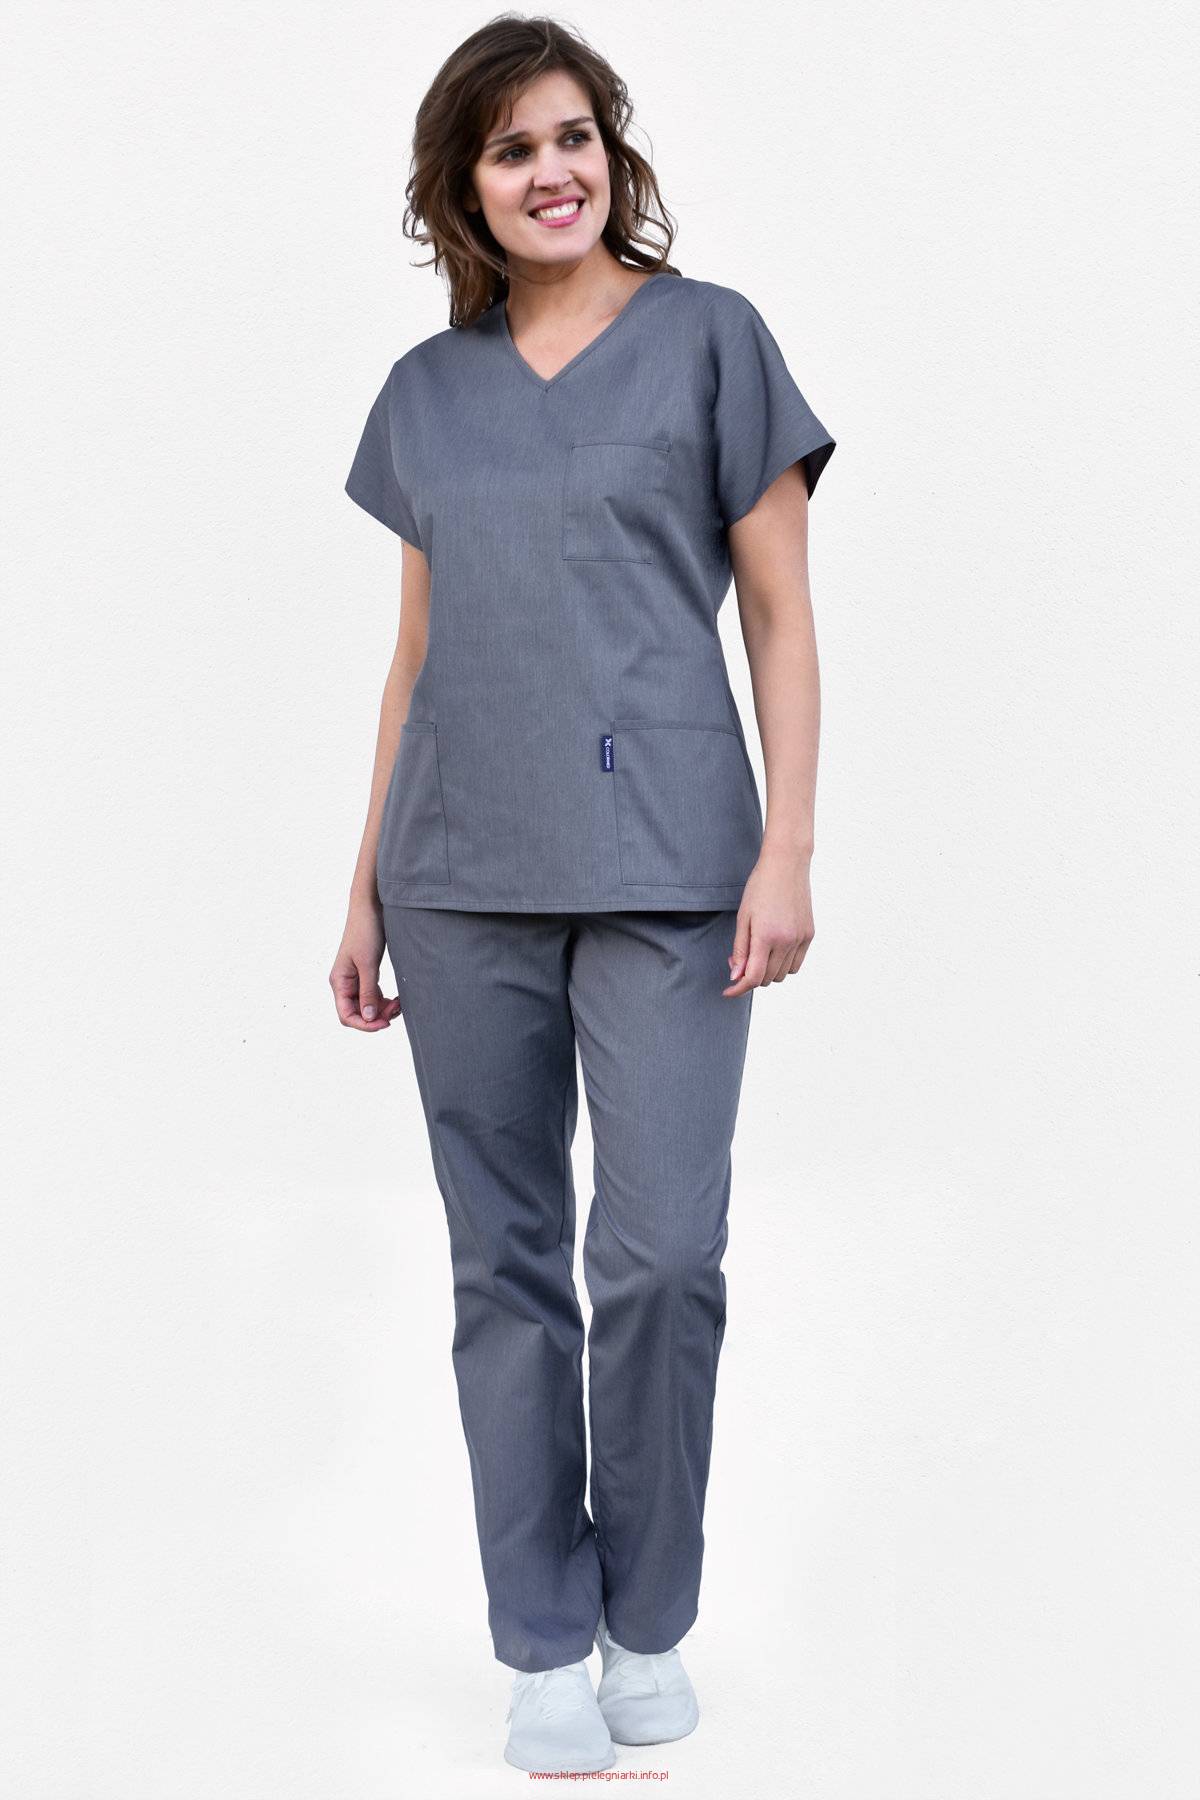 Scrubs / komplet medyczny - bluza typu kimono + spodnie z elastycznym pasem XC4